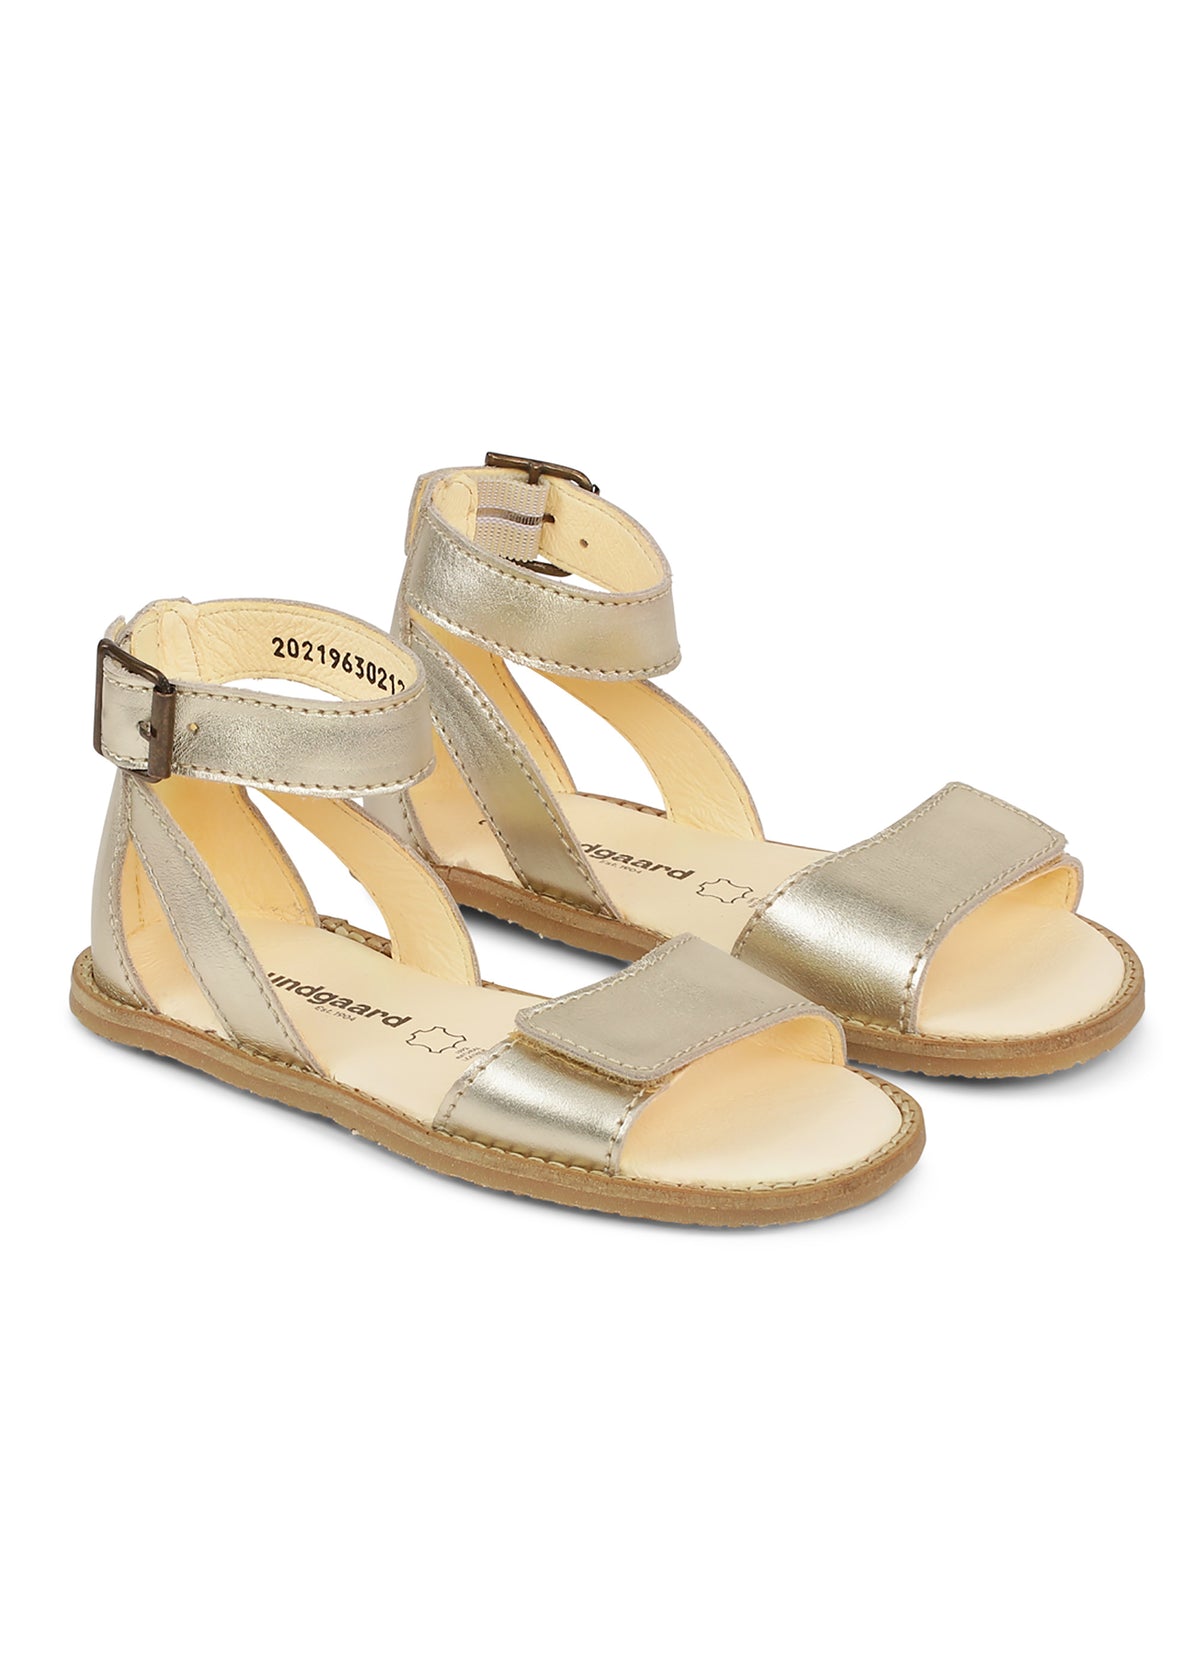 Children's sandals - Sheila, light gold, Bundgaard Zero Heel